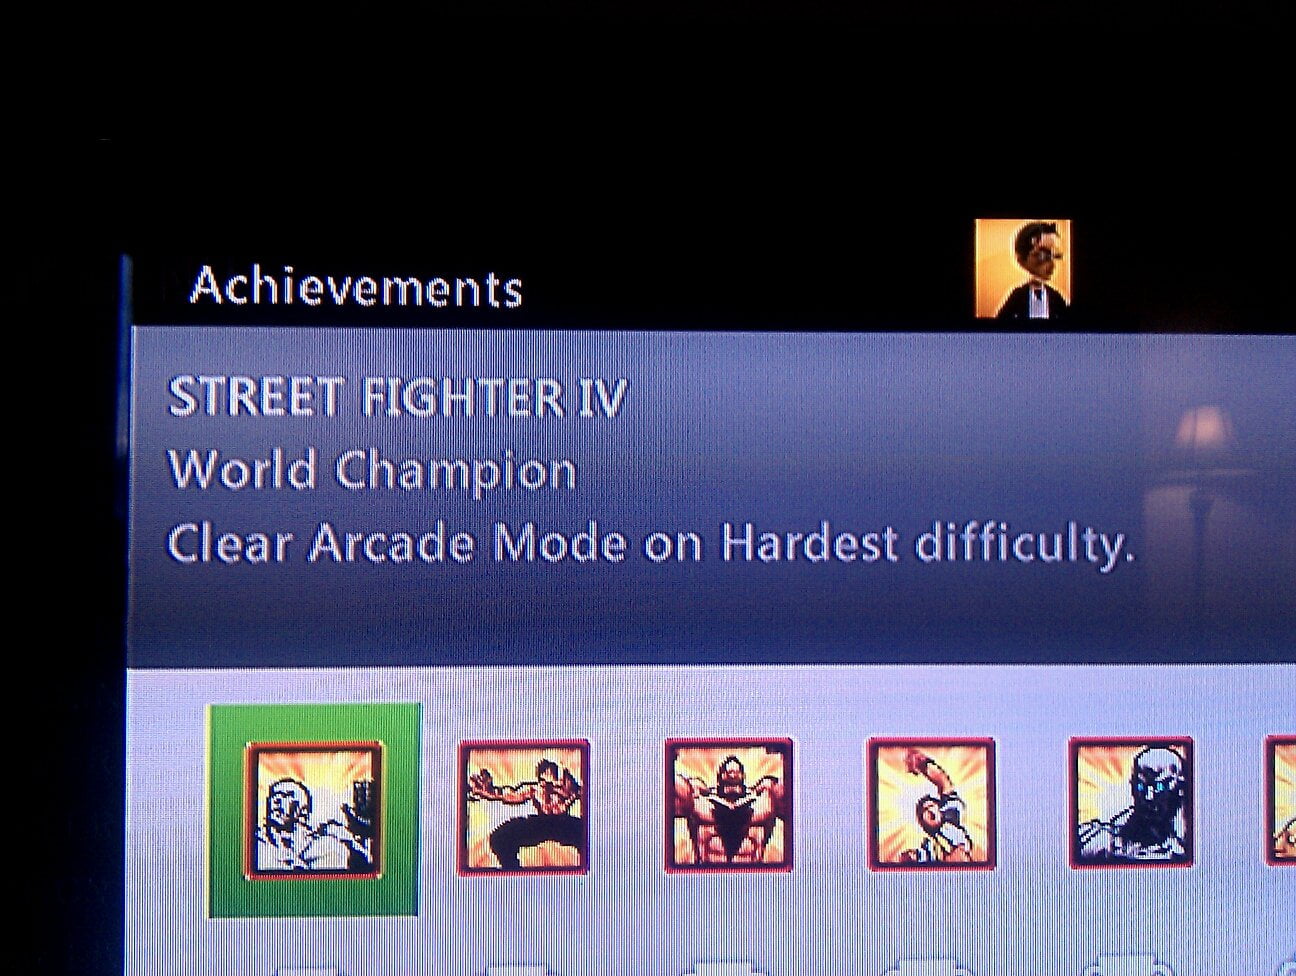 I got "World Champion" in Street Fighter 4 by...